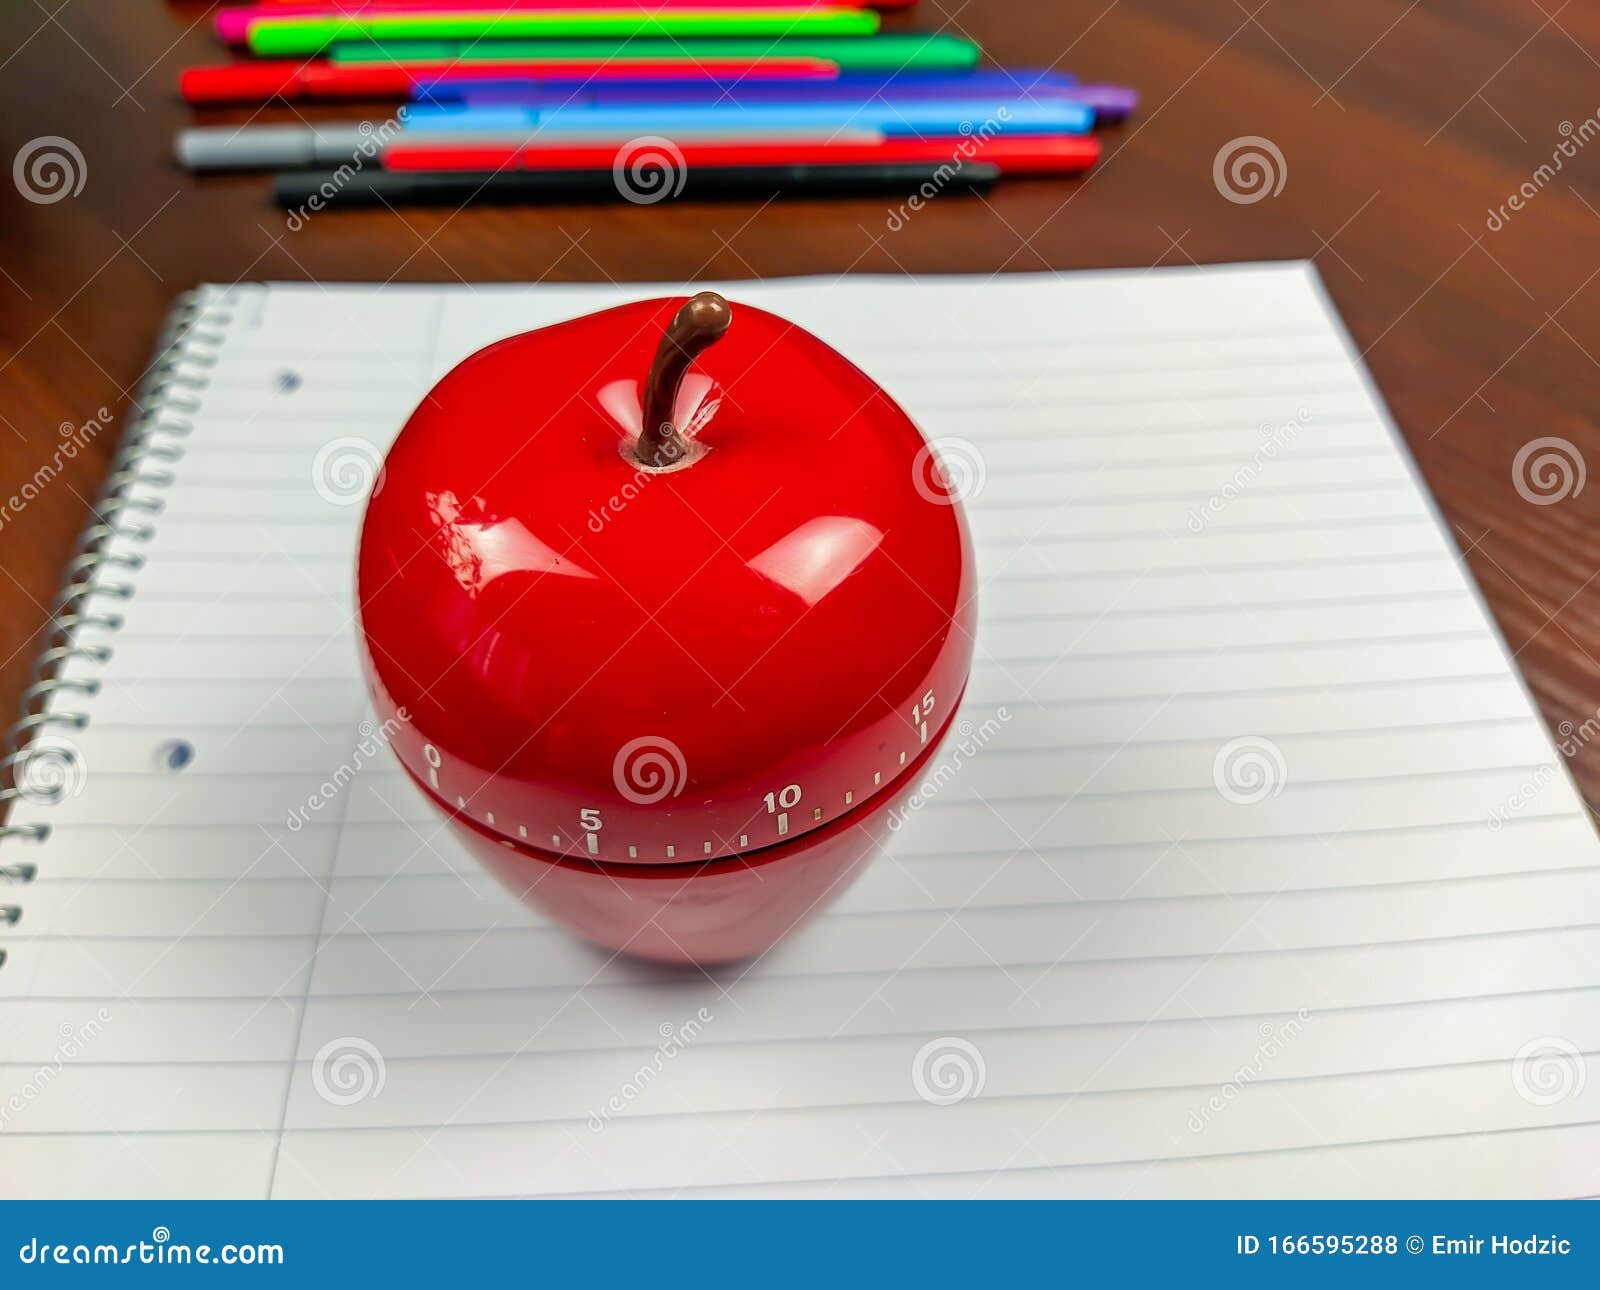 mac tomato timer